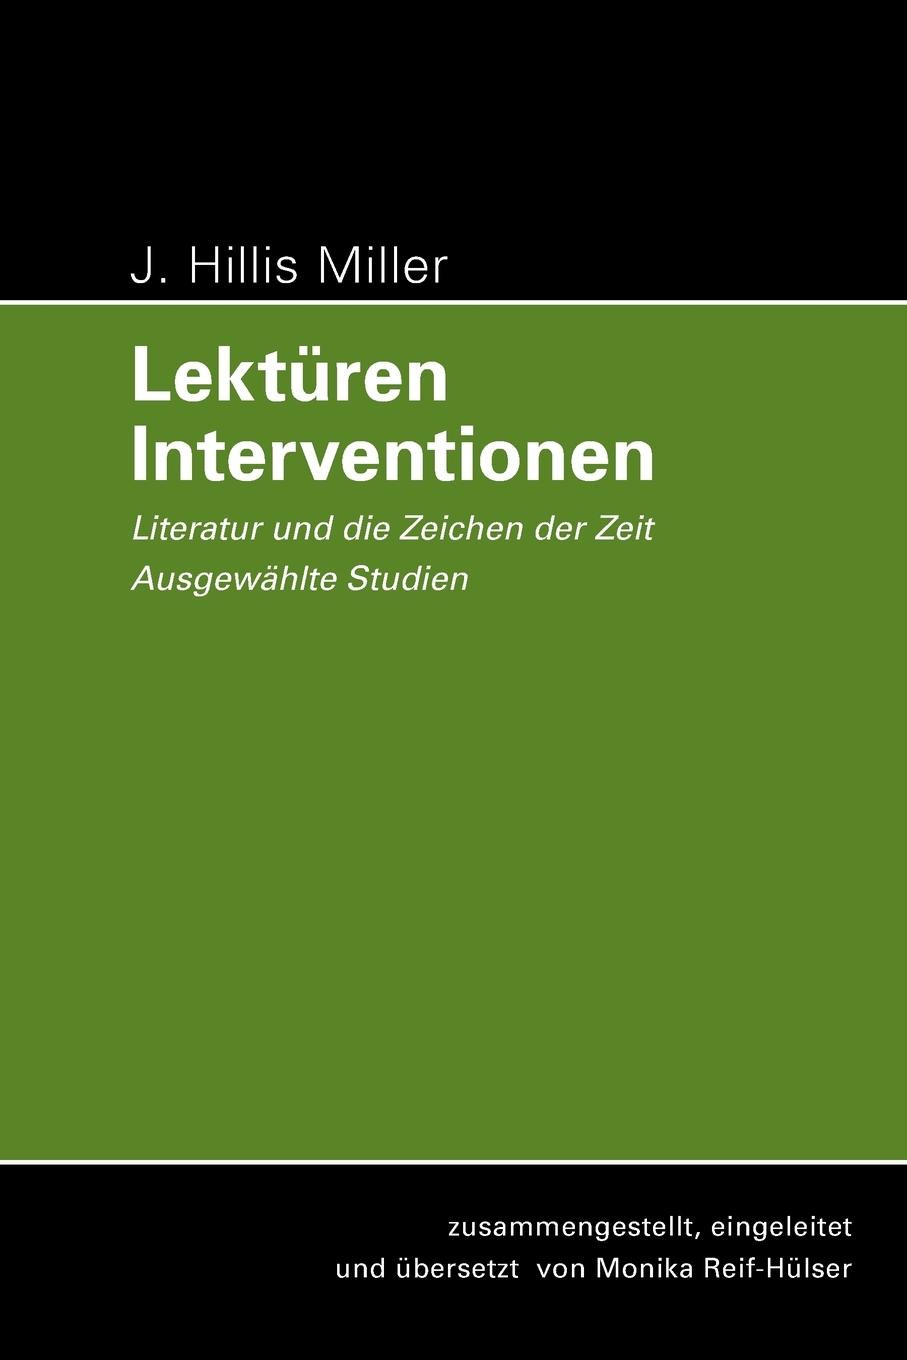 Lektüren - Interventionen - Miller, J. Hillis